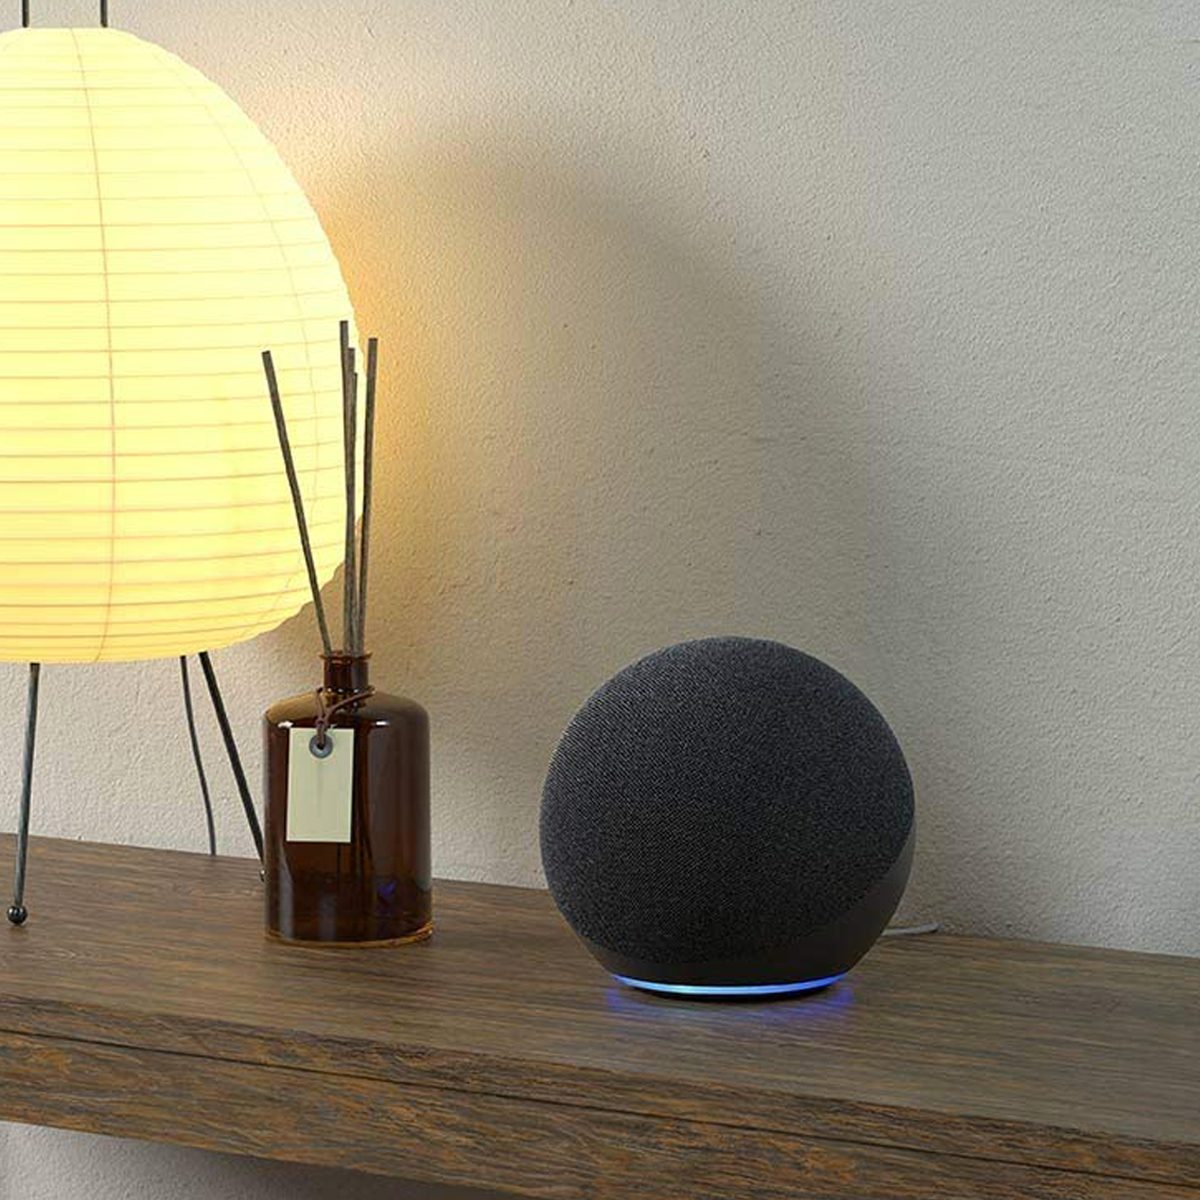 Echo 4th Gen With Premium Sound, Smart Home Hub, And Alexa Ecomm Amazon.com